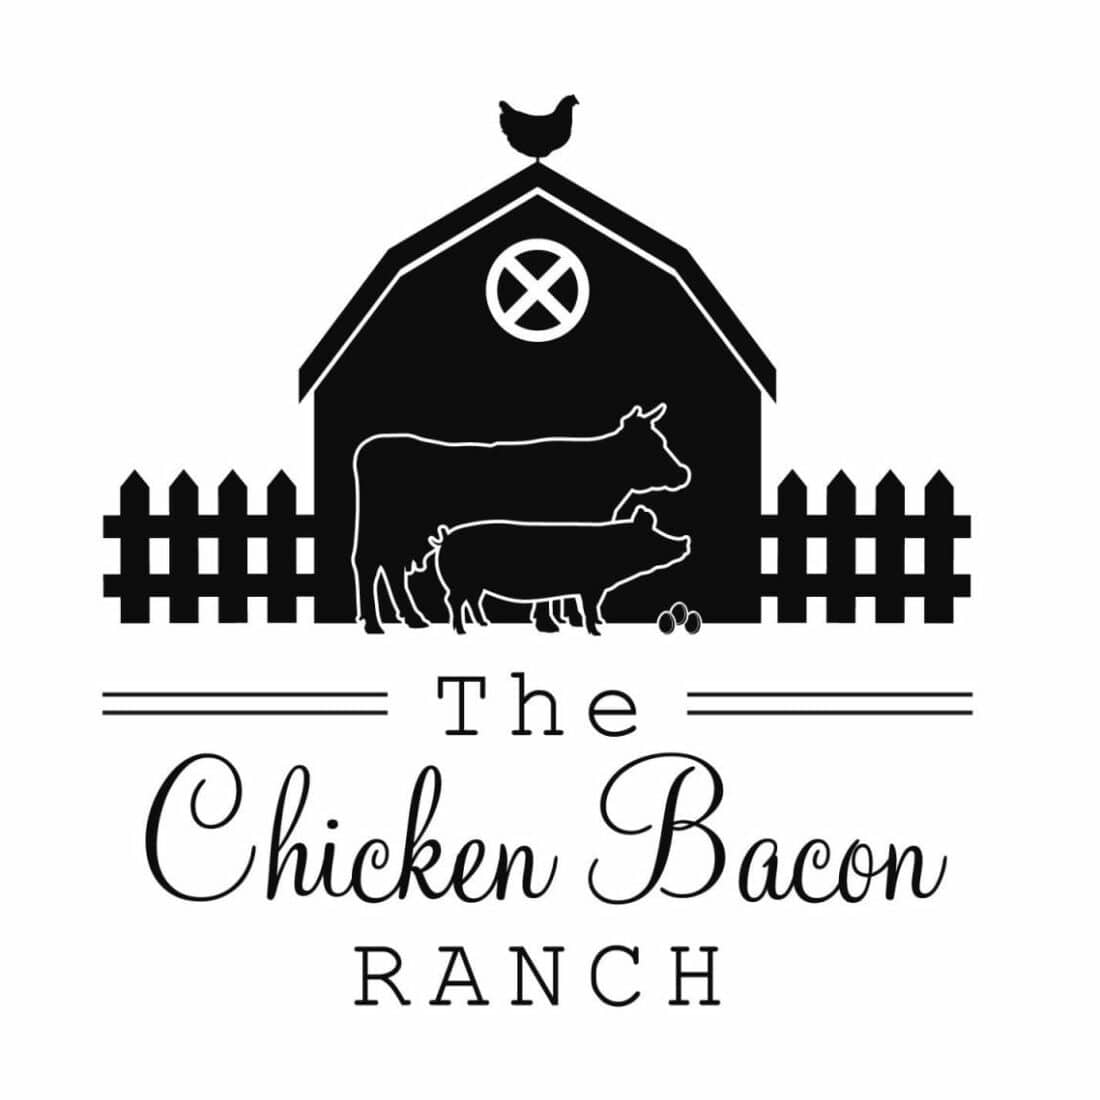 The Chicken Bacon Ranch